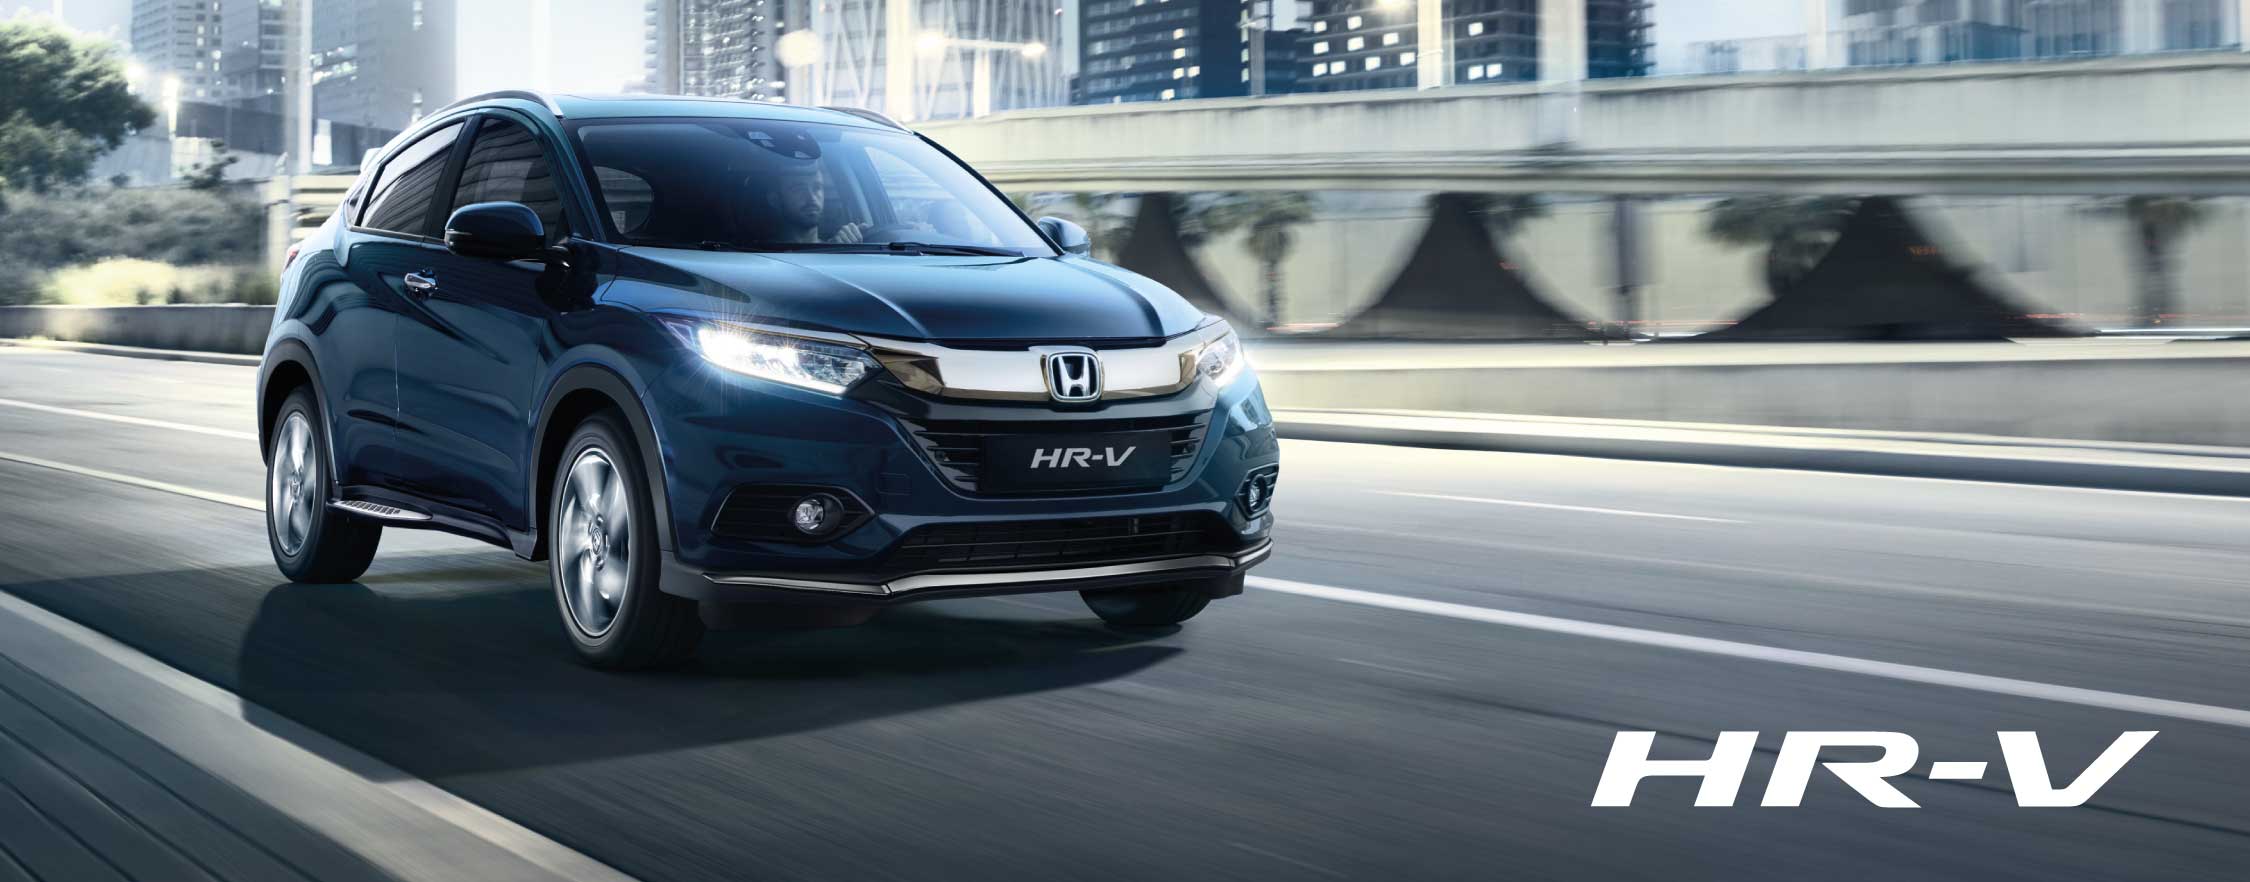 Introducing the Honda HR-V